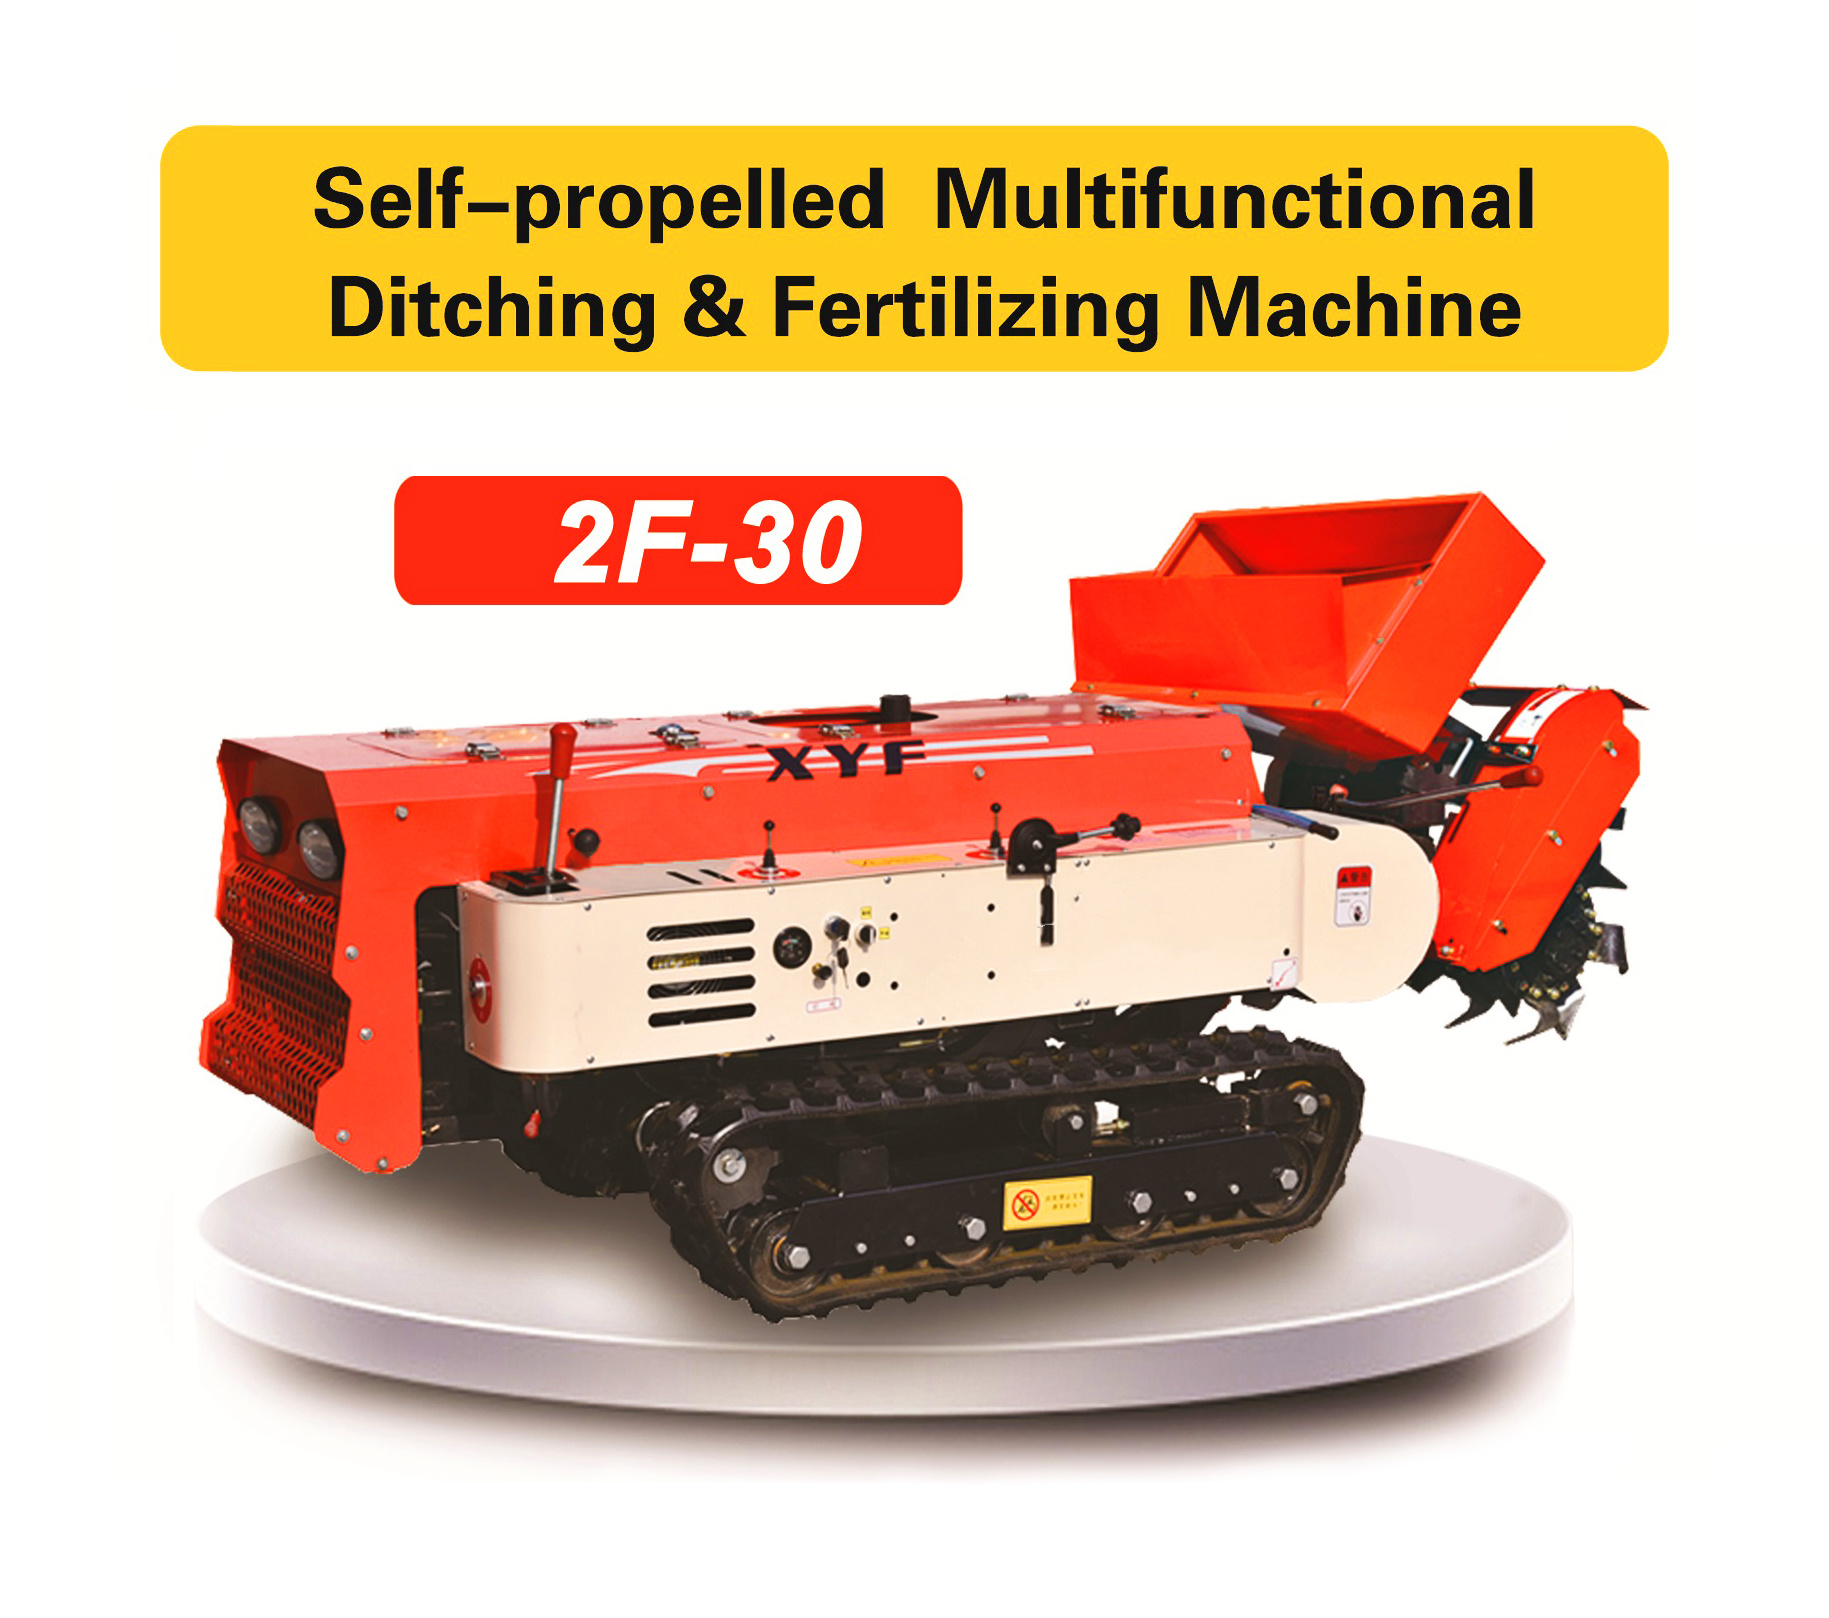 Model 2F-30 Self-propelled Multifunctional Ditching & Fertilizing Machine